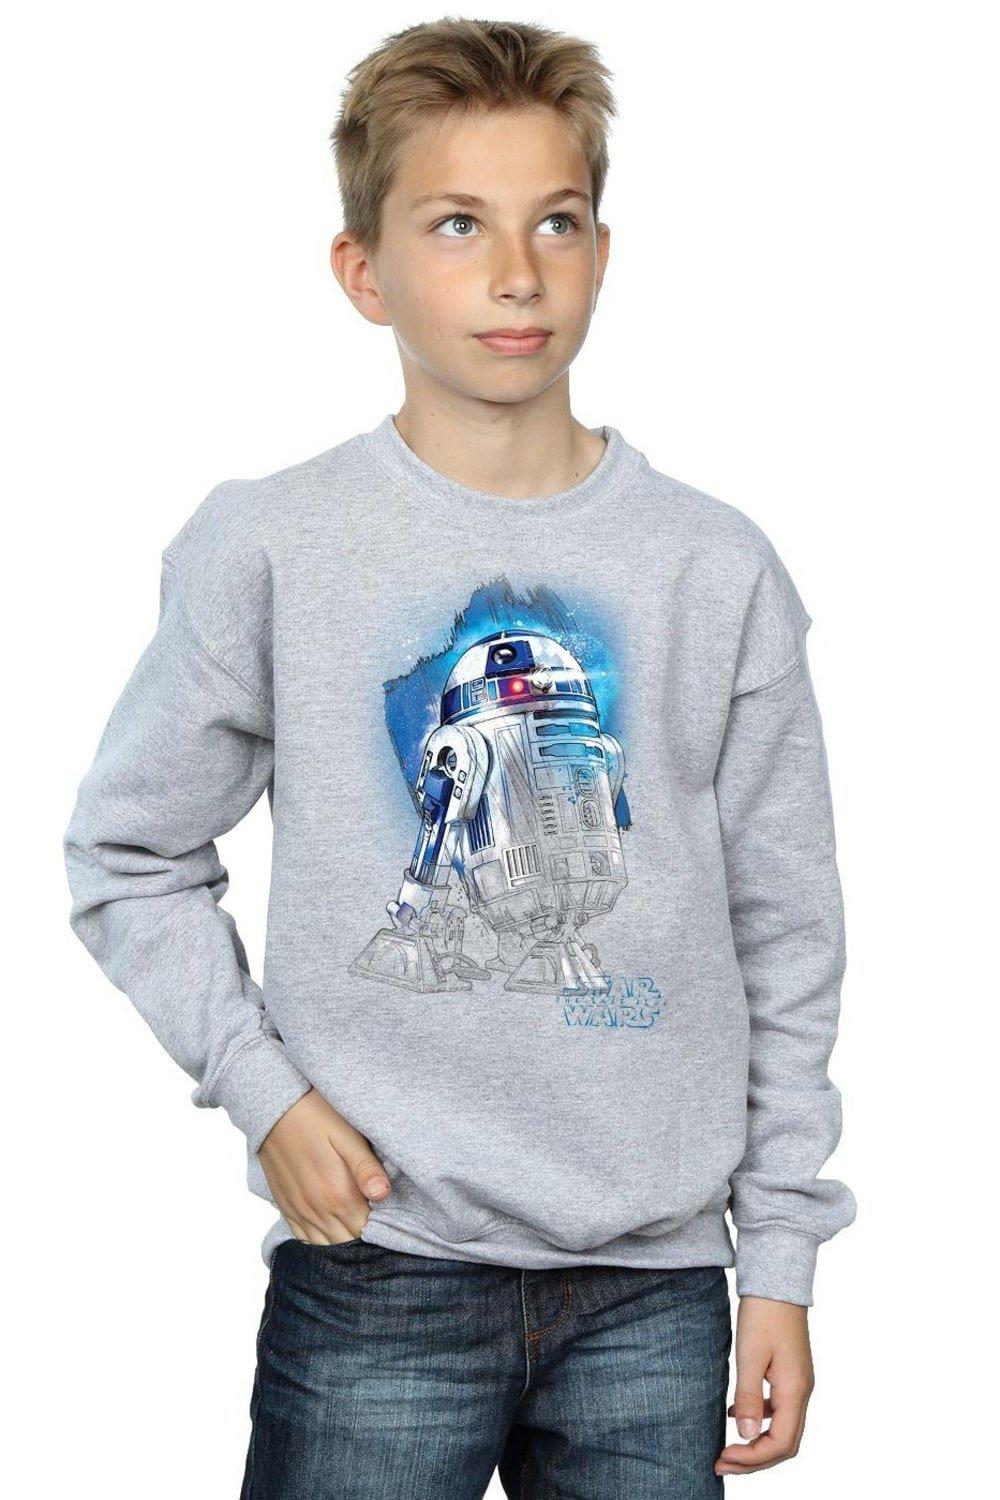 R2-D2 Brushed Sweatshirt